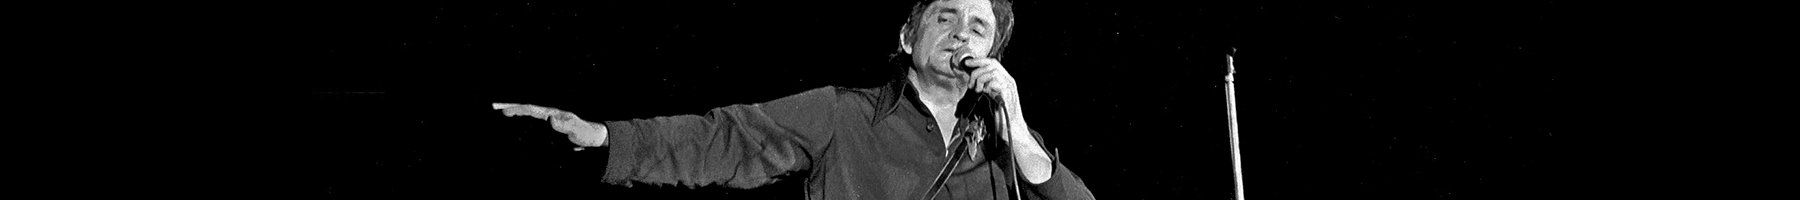 Johnny Cash in concert